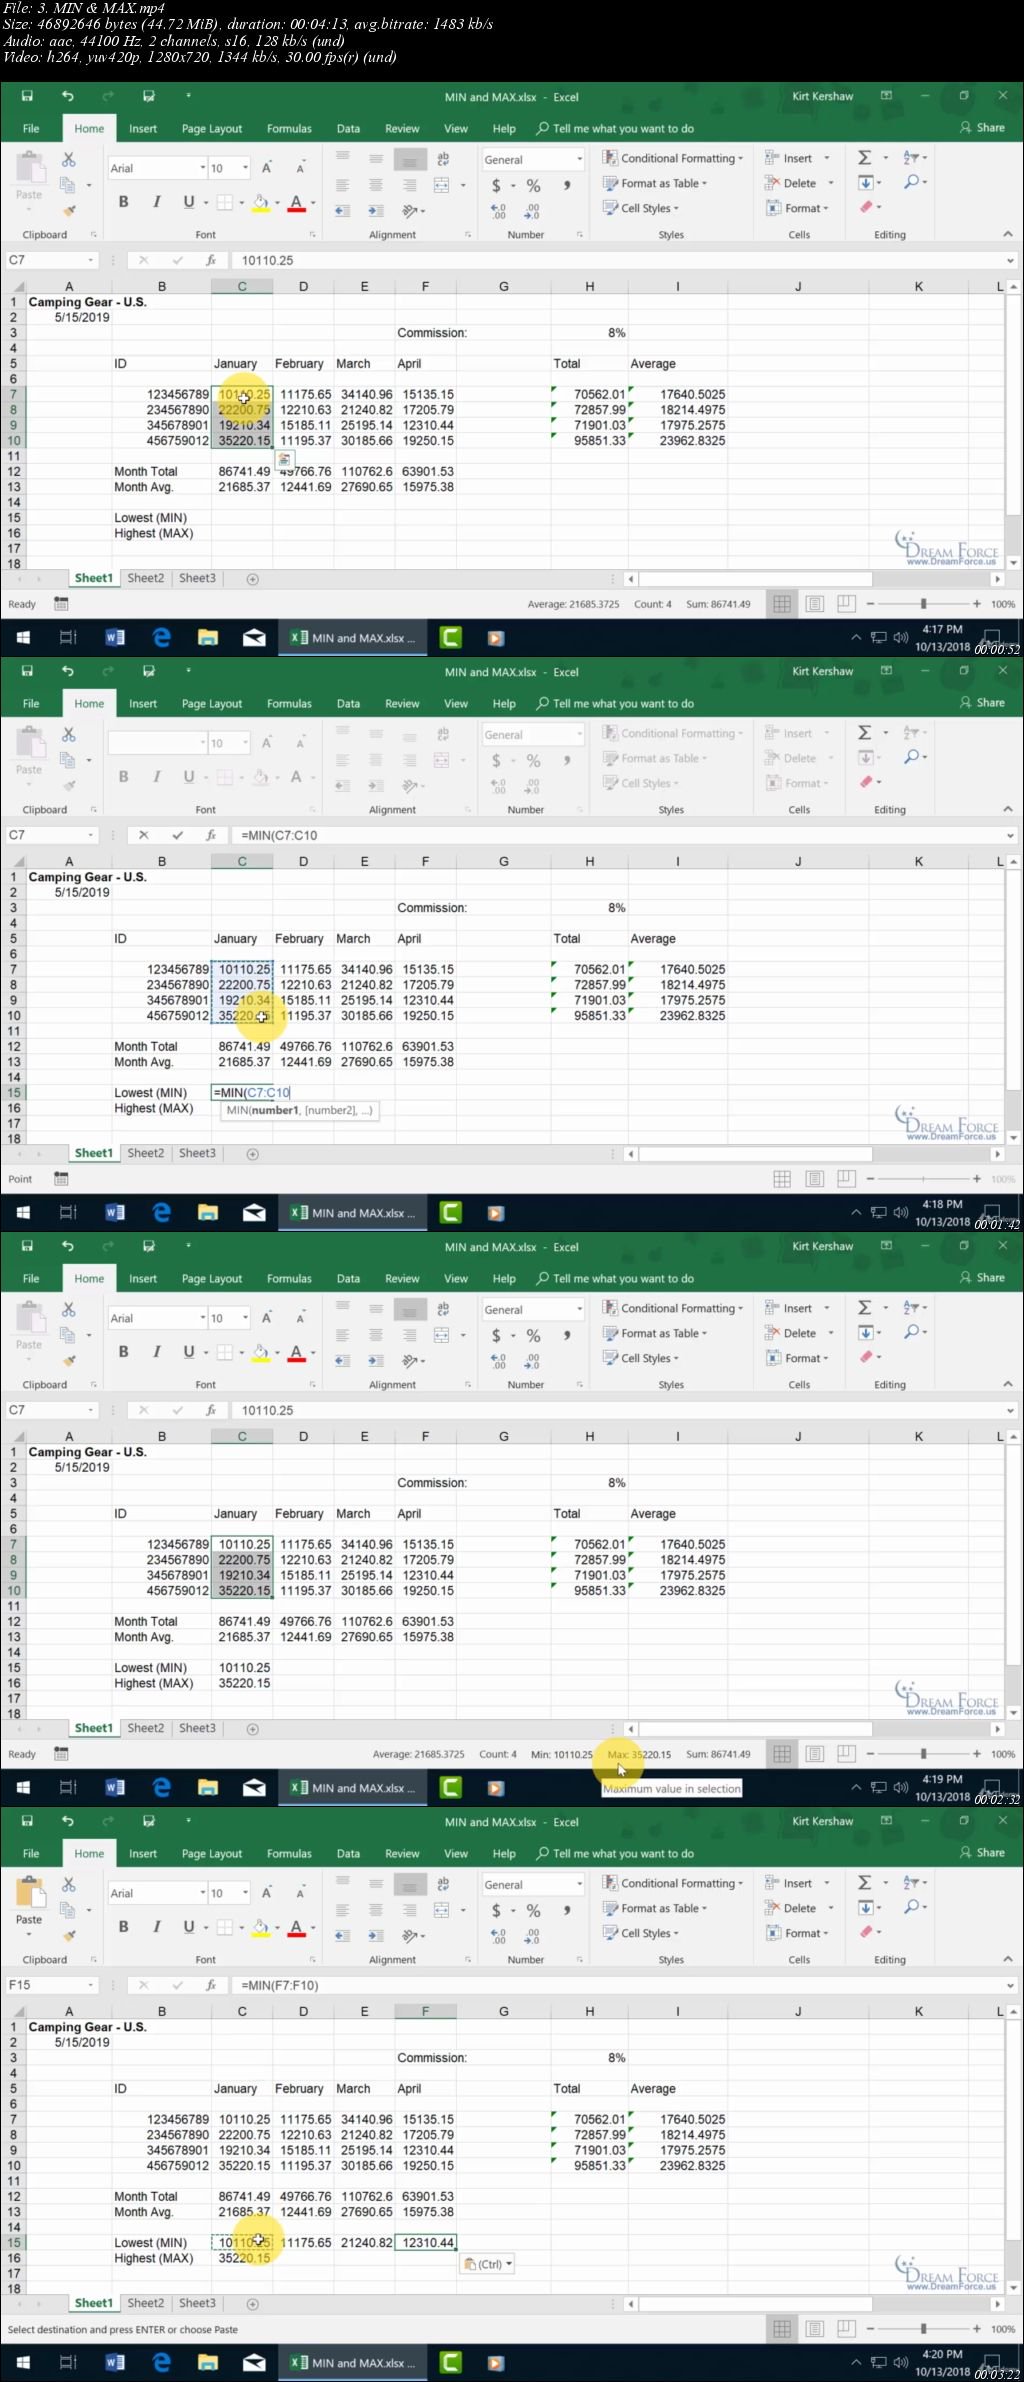 Microsoft Excel 2019 Level 1 - Beginner Excel 2019